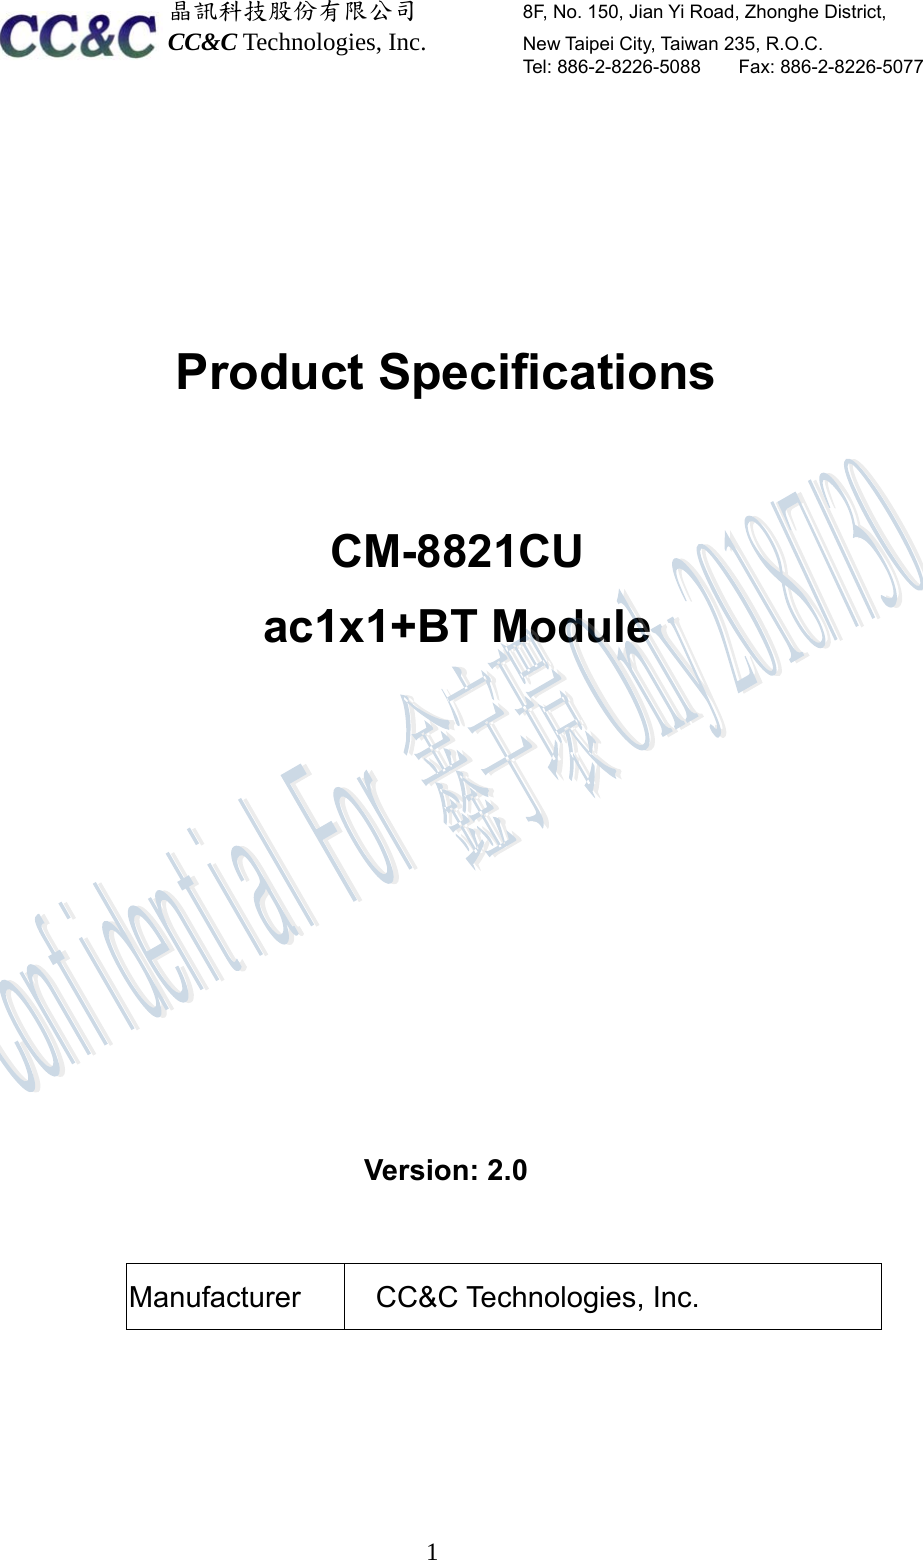  晶訊科技股份有限公司         8F, No. 150, Jian Yi Road, Zhonghe District,   CC&amp;C Technologies, Inc.        New Taipei City, Taiwan 235, R.O.C.   Tel: 886-2-8226-5088    Fax: 886-2-8226-5077  1        Product Specifications    CM-8821CU  ac1x1+BT Module              Version: 2.0   Manufacturer CC&amp;C Technologies, Inc.    